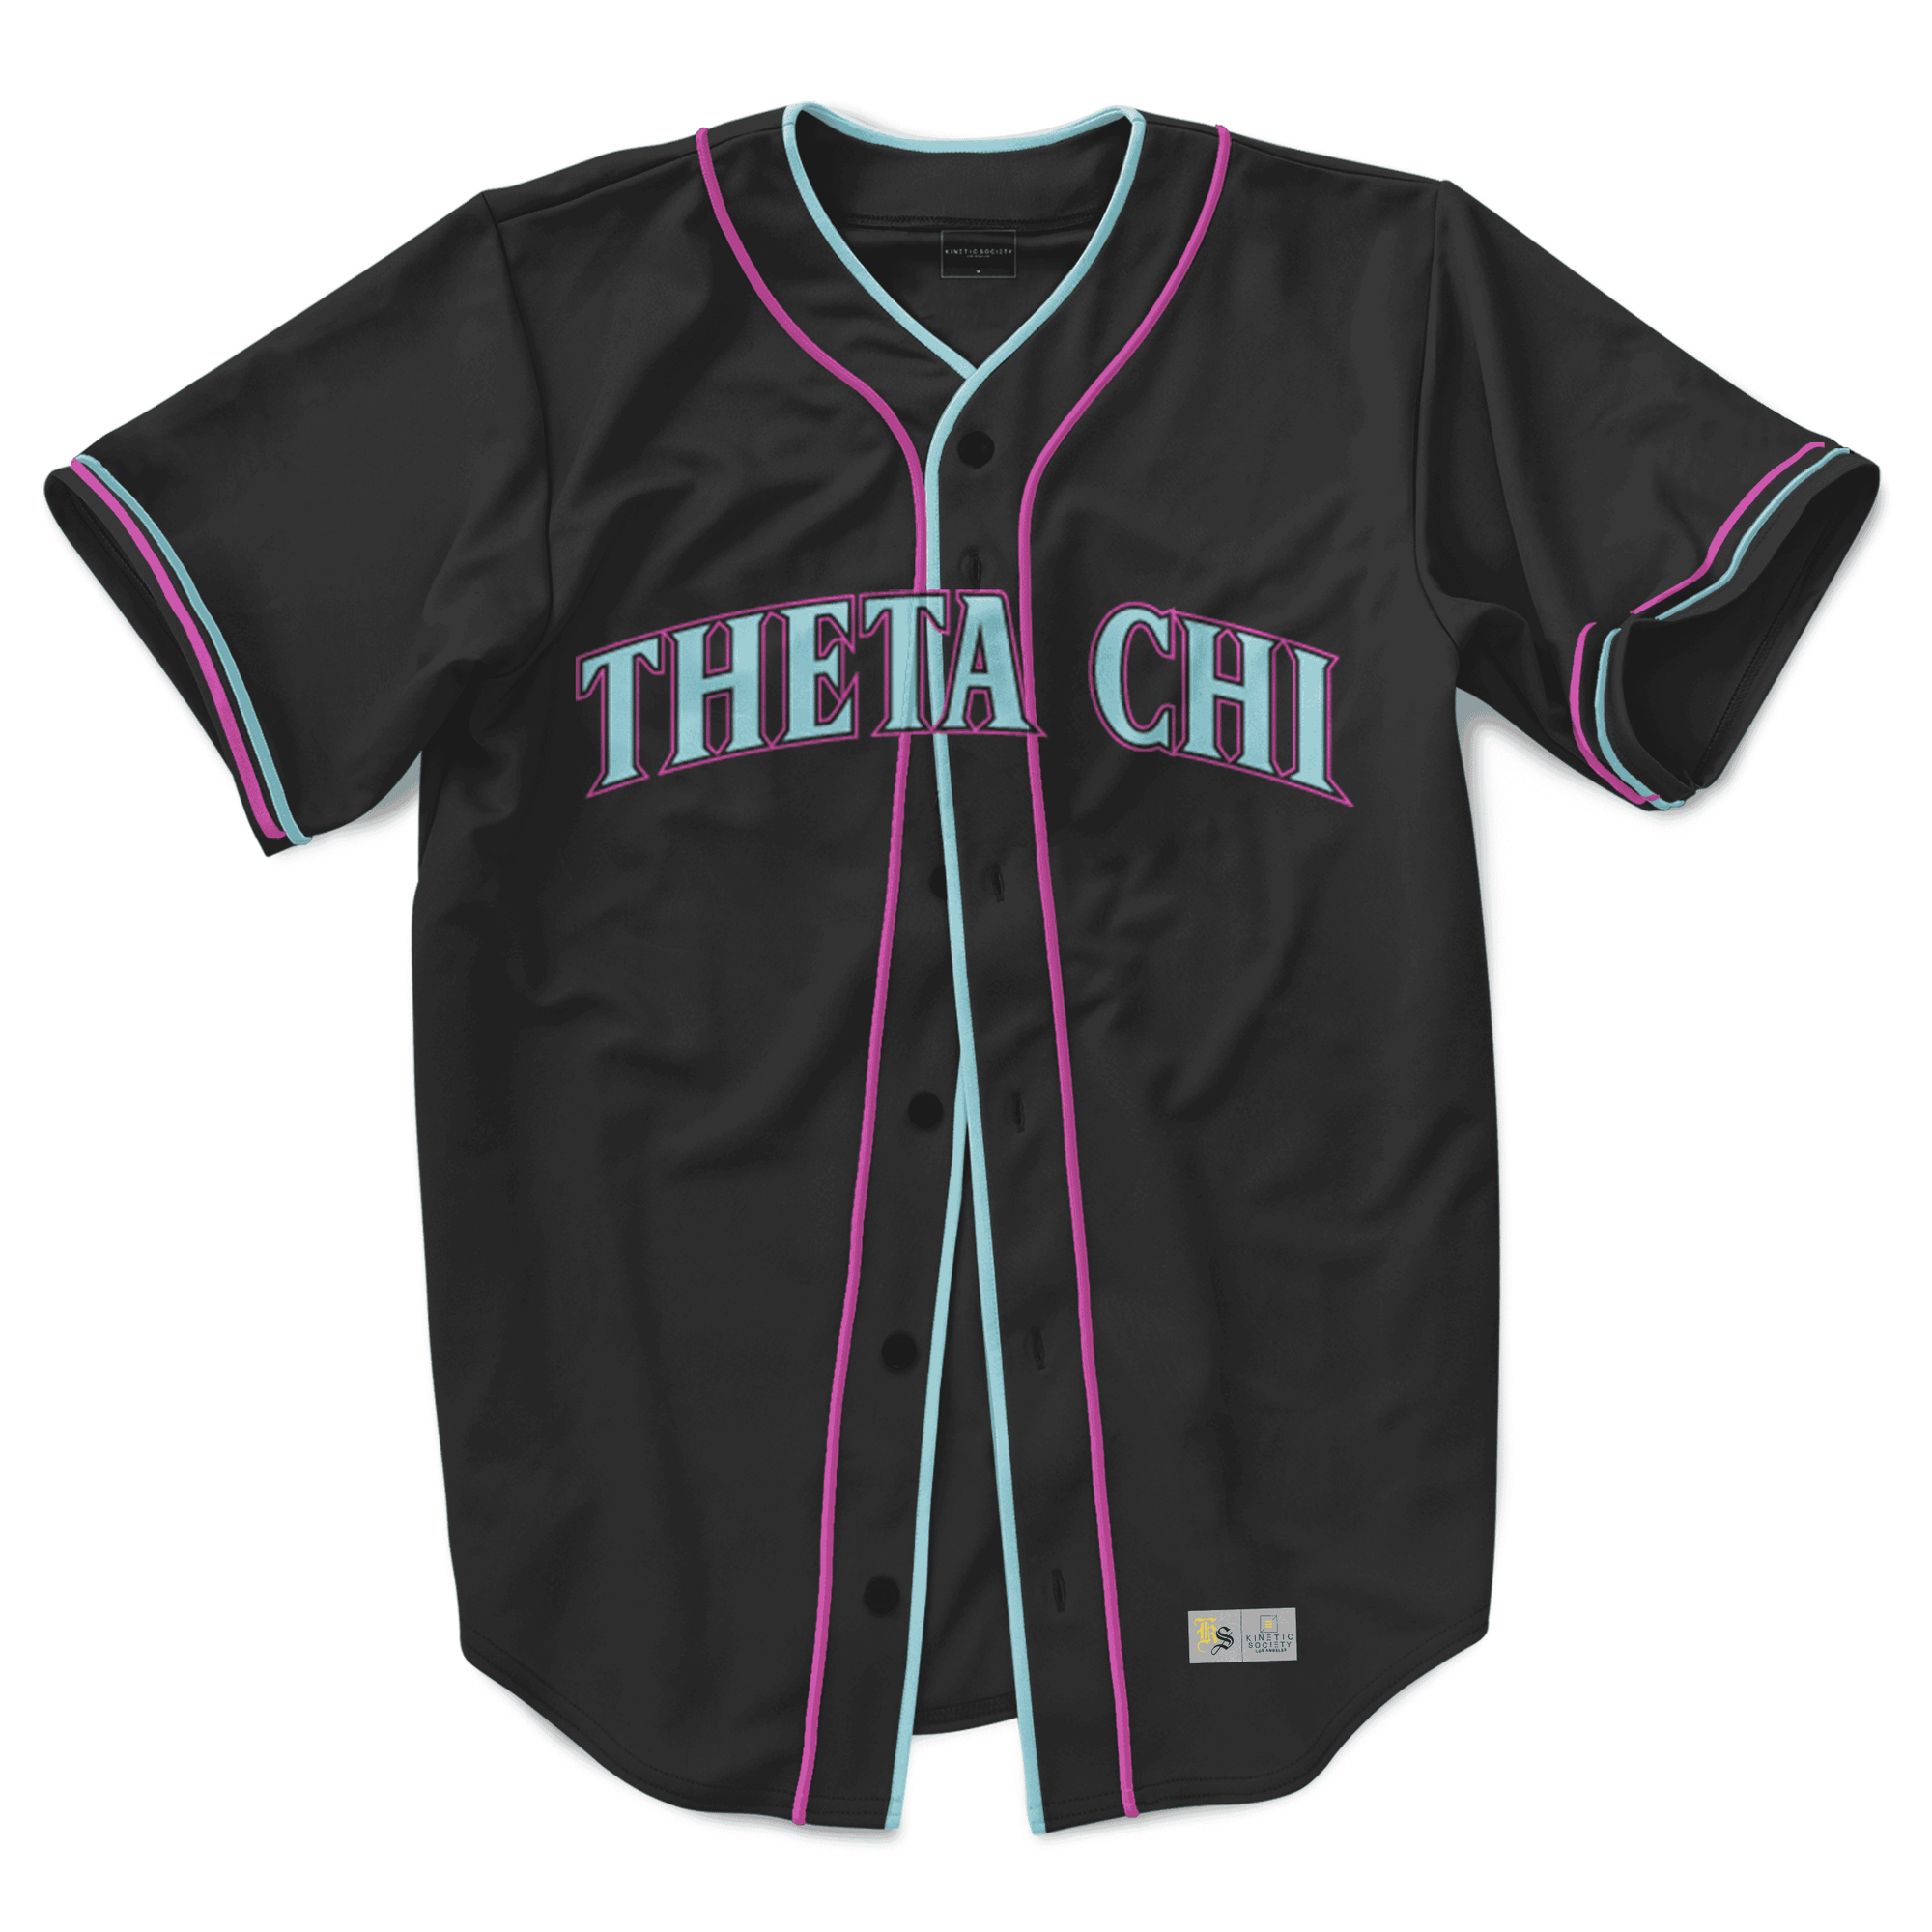 Theta Chi - Neo Nightlife Baseball Jersey